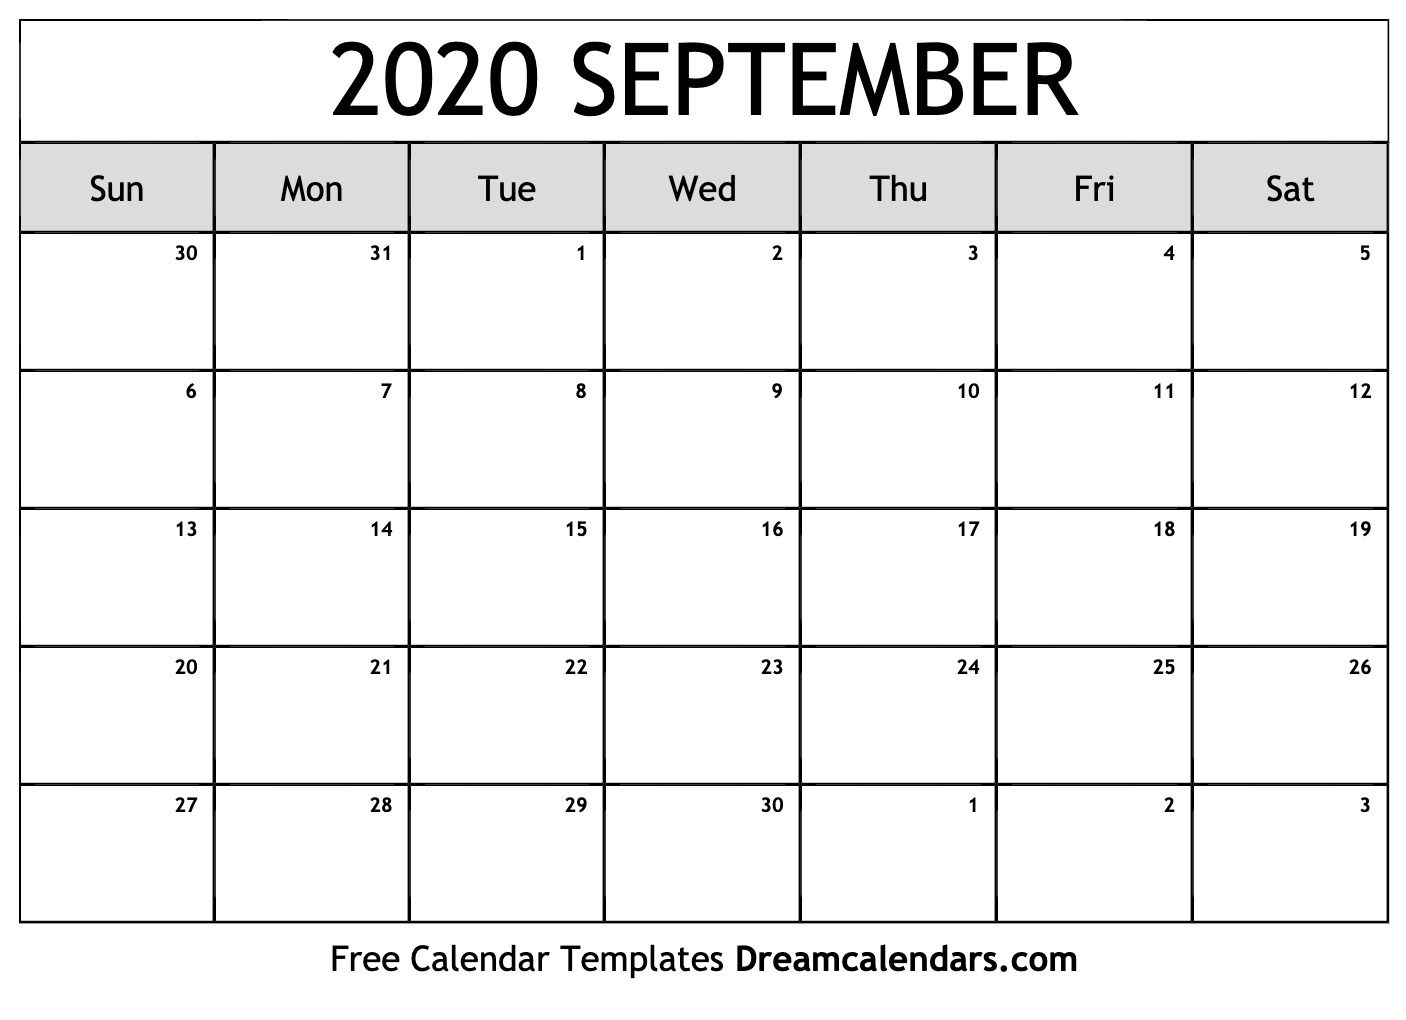 September 2020 Calendar Wallpapers   Top Free September 2020